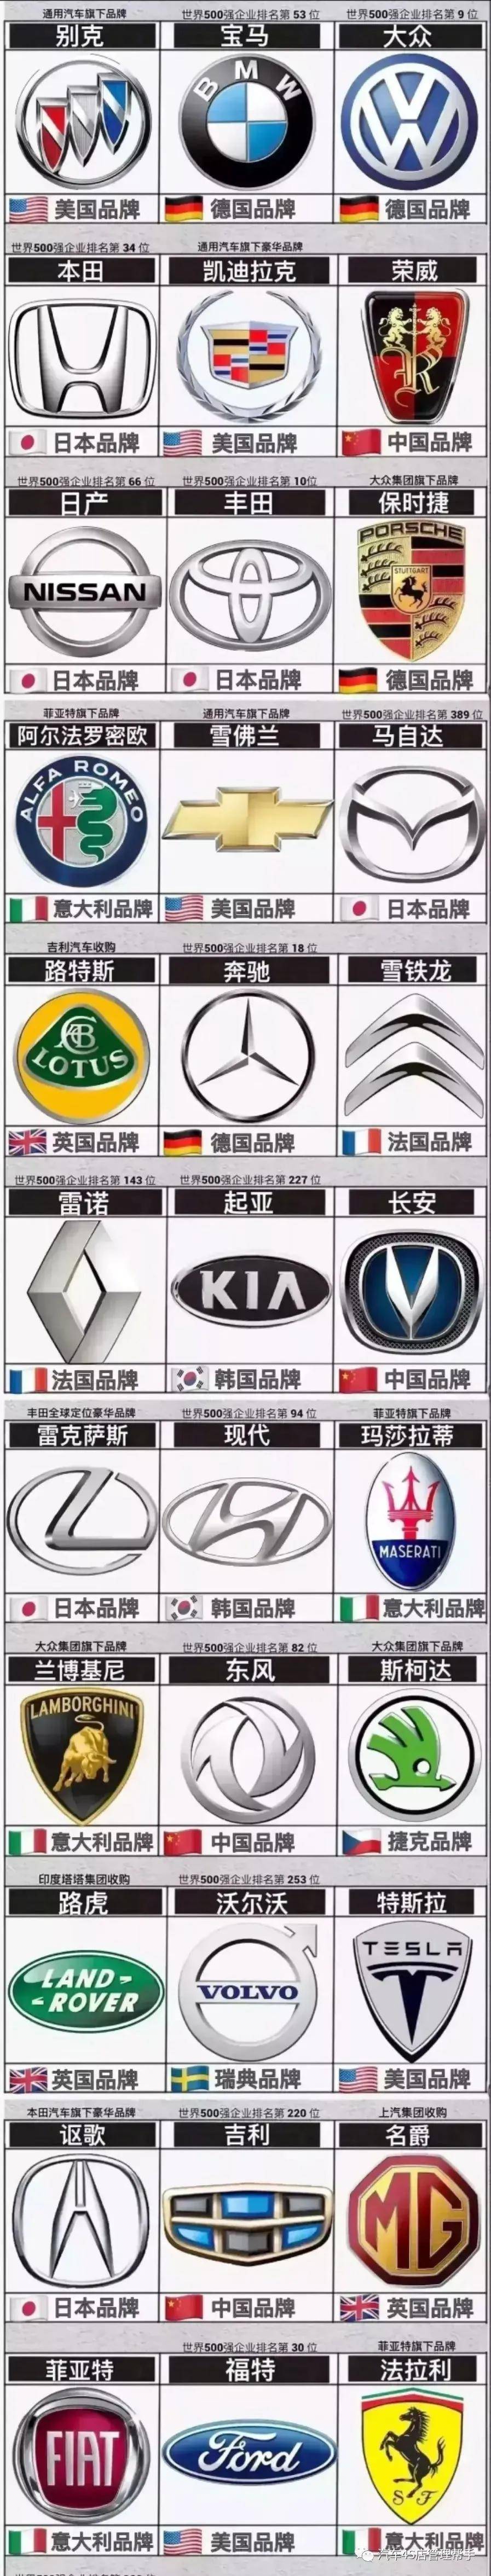 全球汽车品牌车标大全